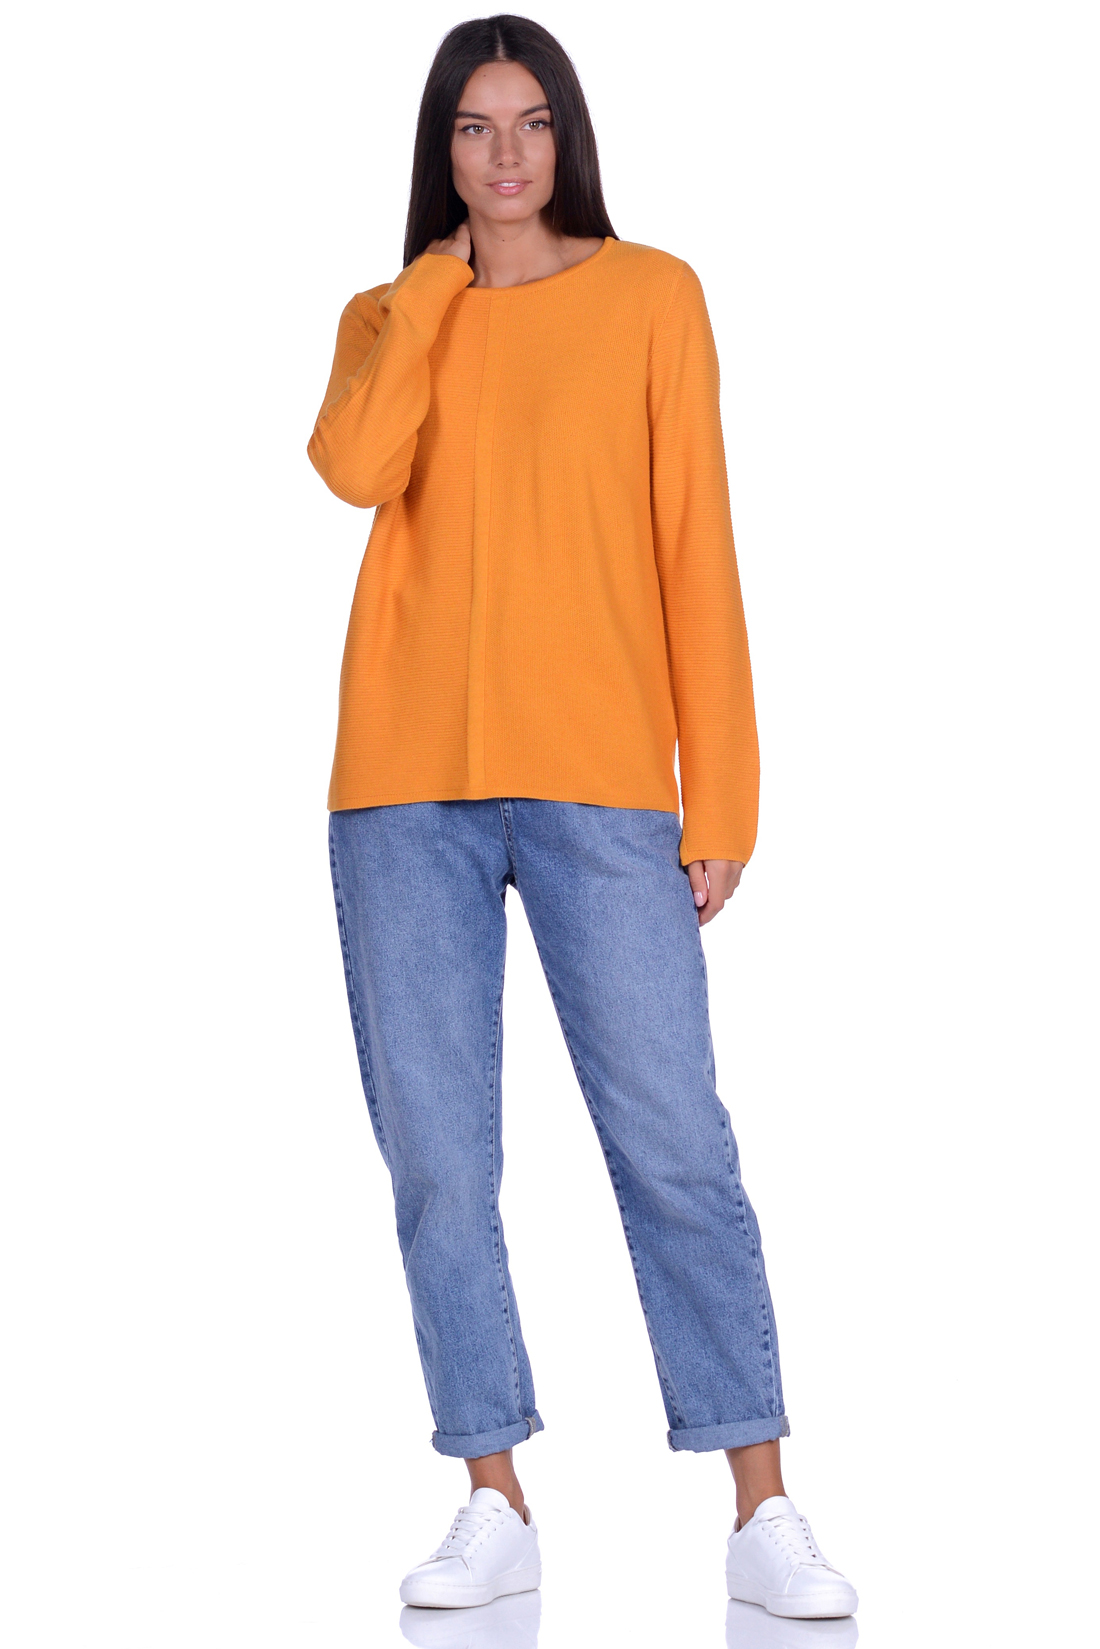 Джемпер (арт. baon B130603), размер XXL, цвет оранжевый Джемпер (арт. baon B130603) - фото 5